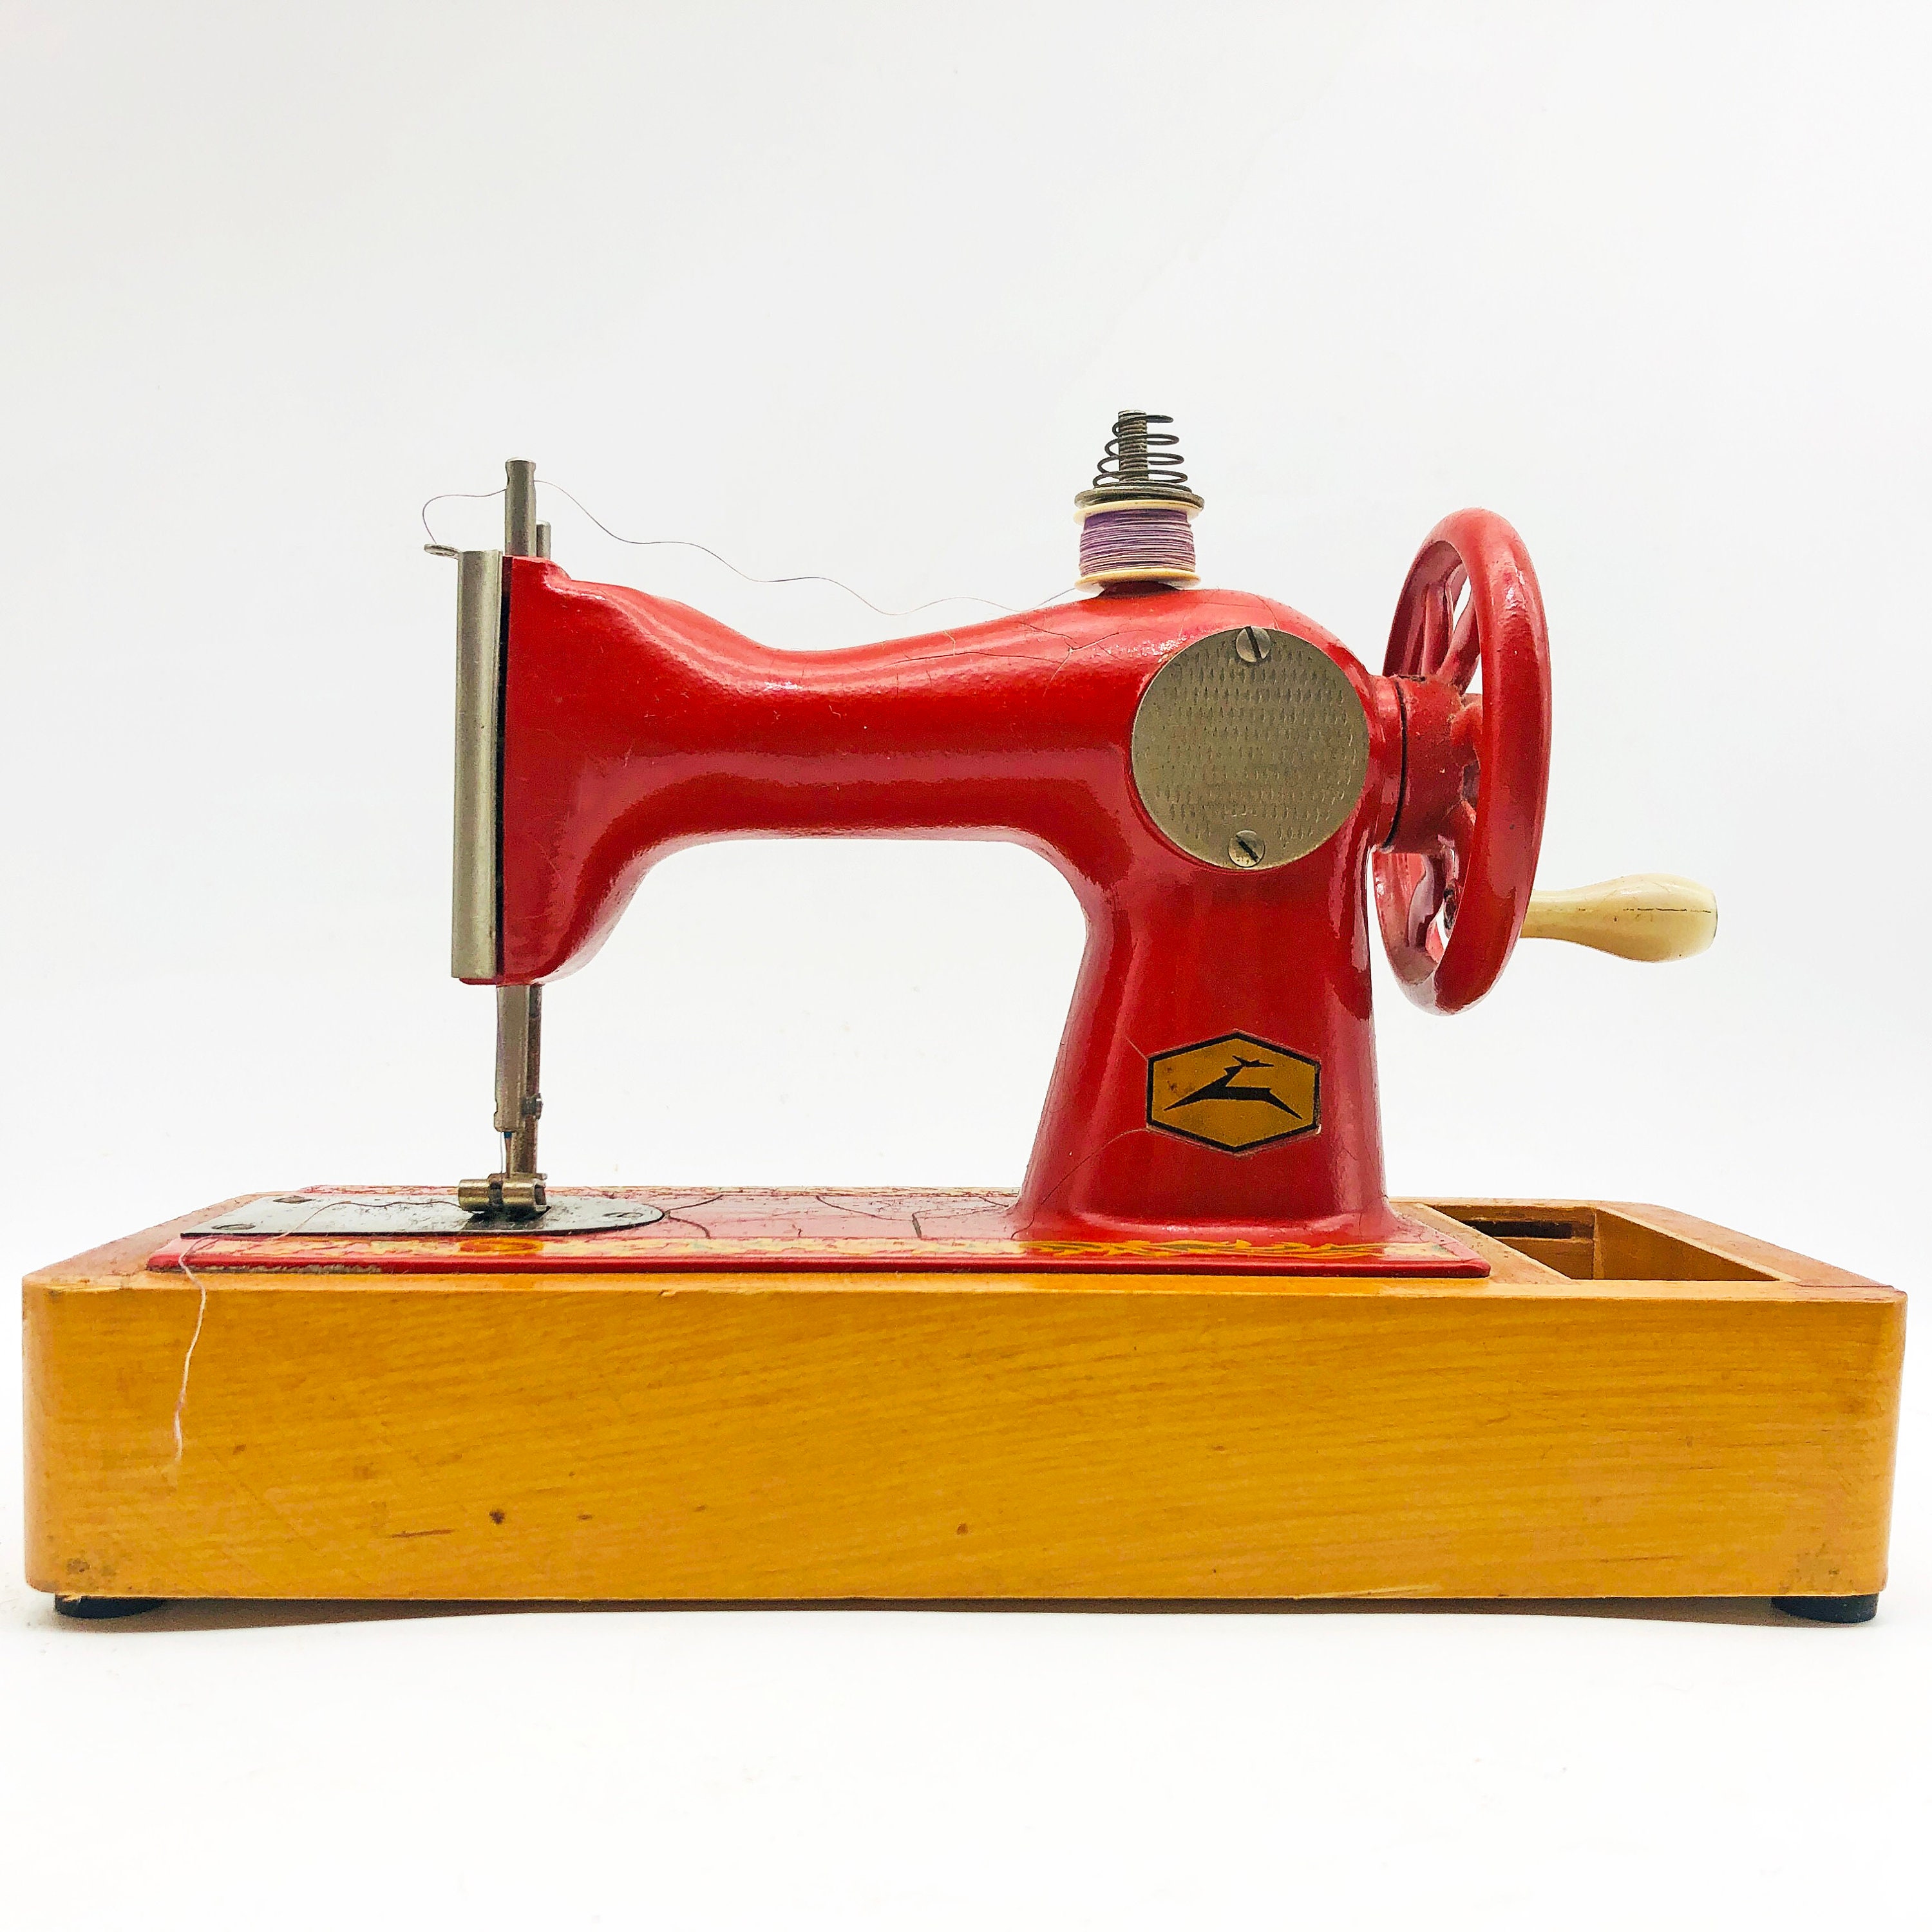 Portable Mini Stitch Manual Sewing Machine Simple Operation